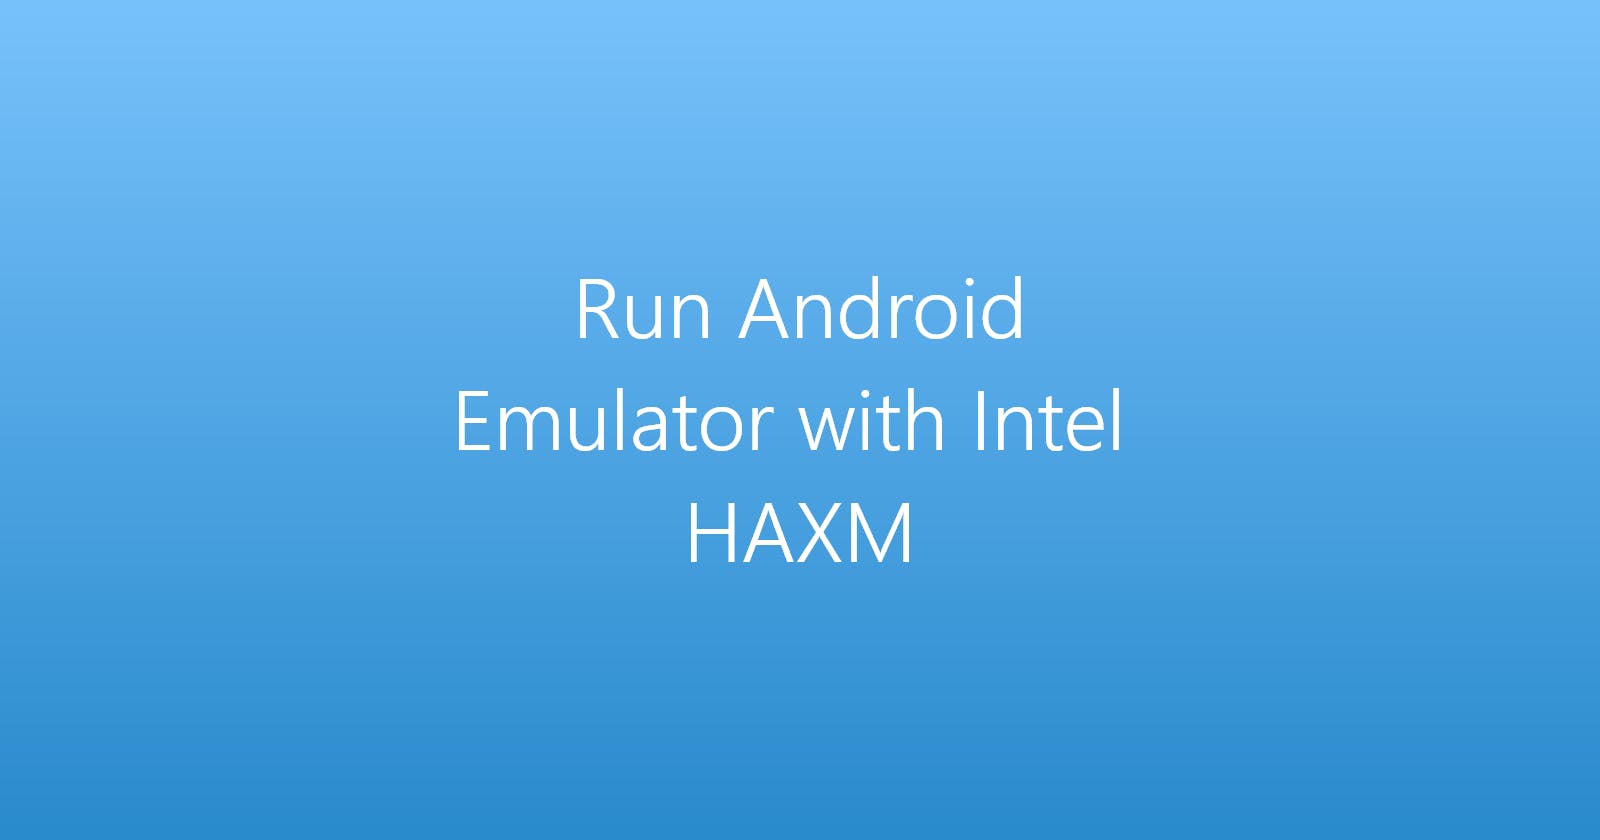 Run Fast Android Emulators with Intel HAXM